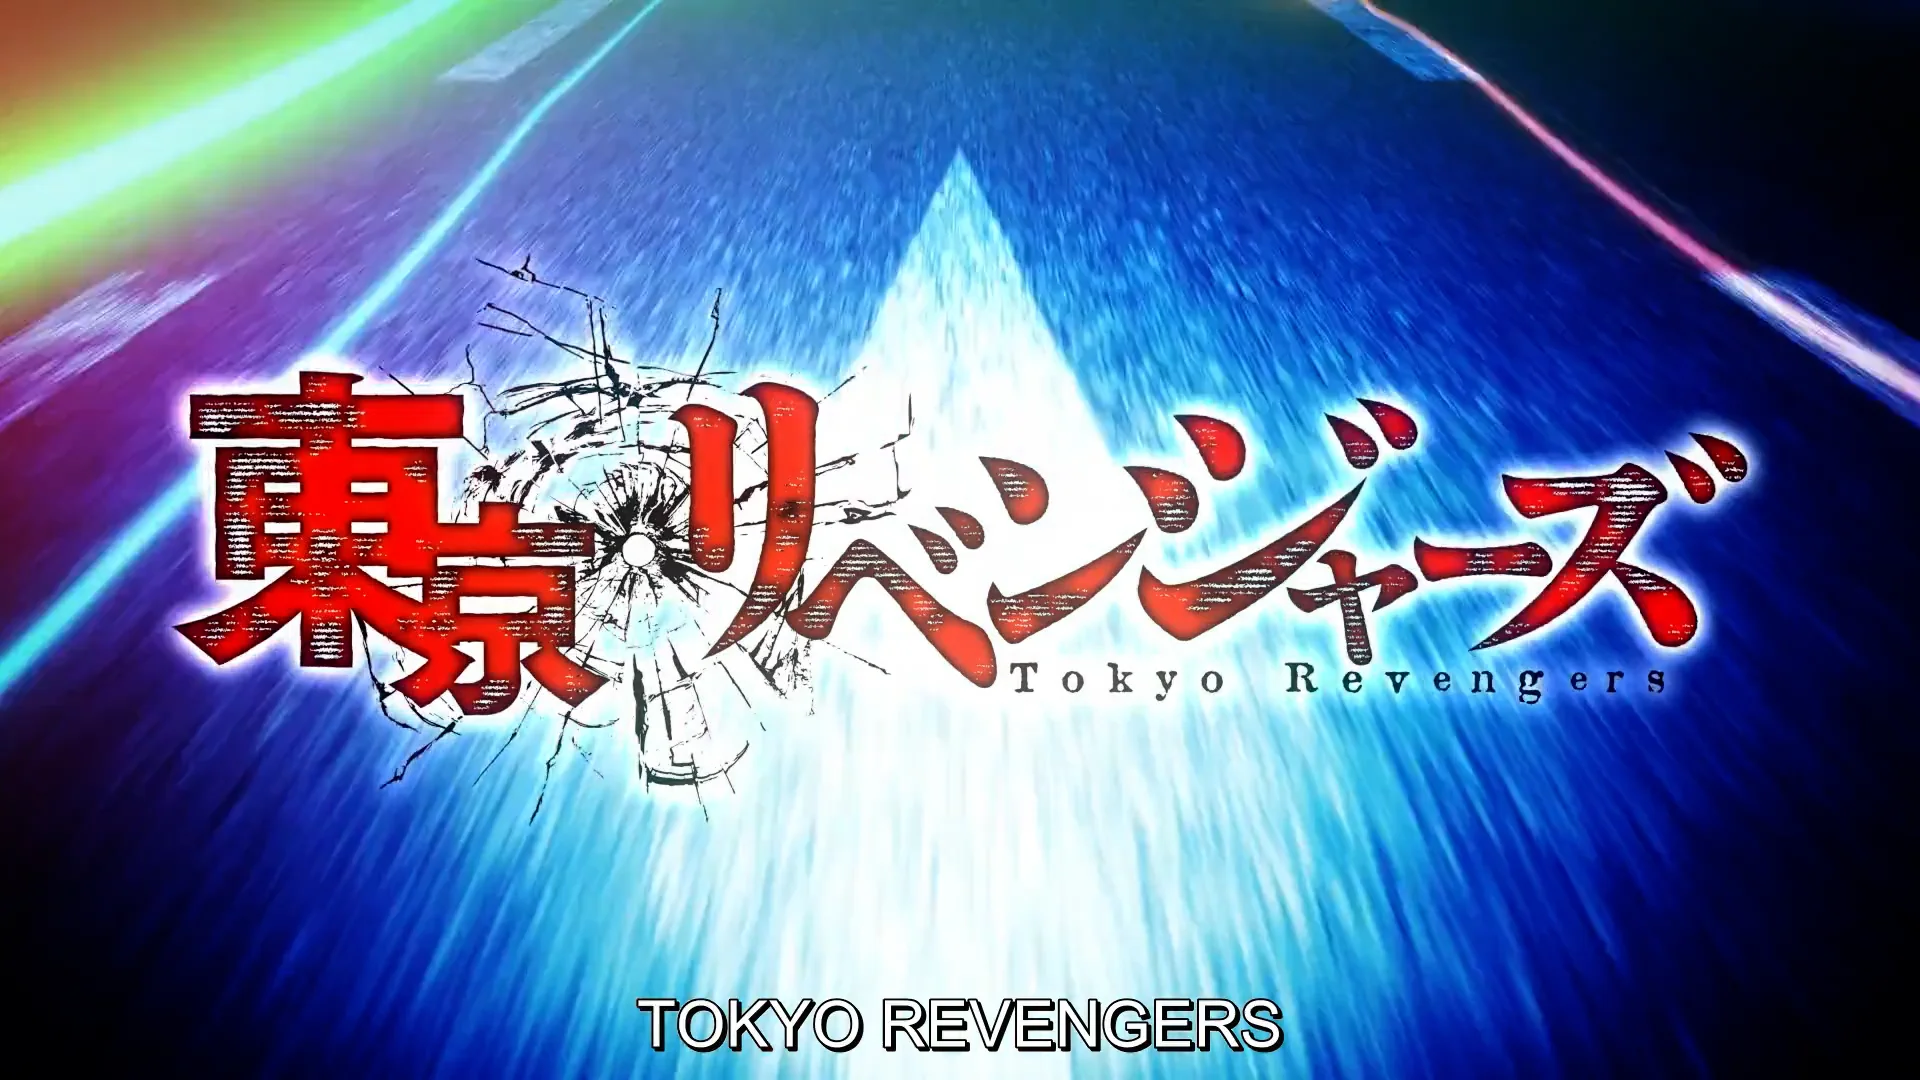 TOKYO revengers season 2 Ep- 1 on Vimeo